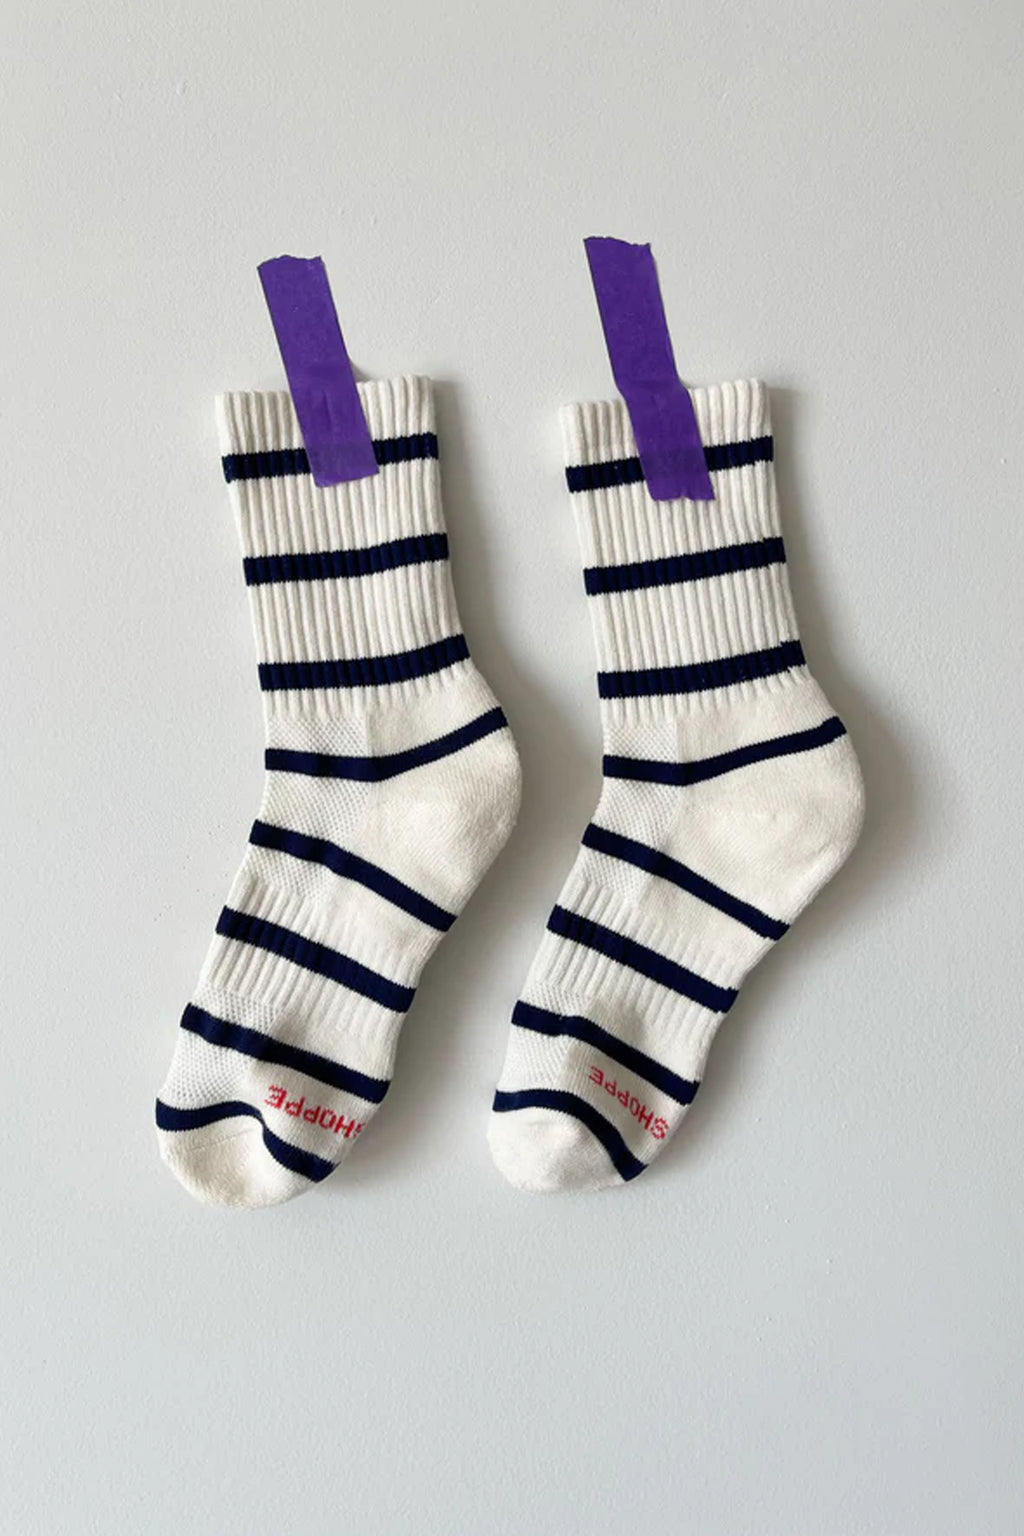 Le Bon Shoppe Boyfriend Striped Sailor Socks - The Mercantile London